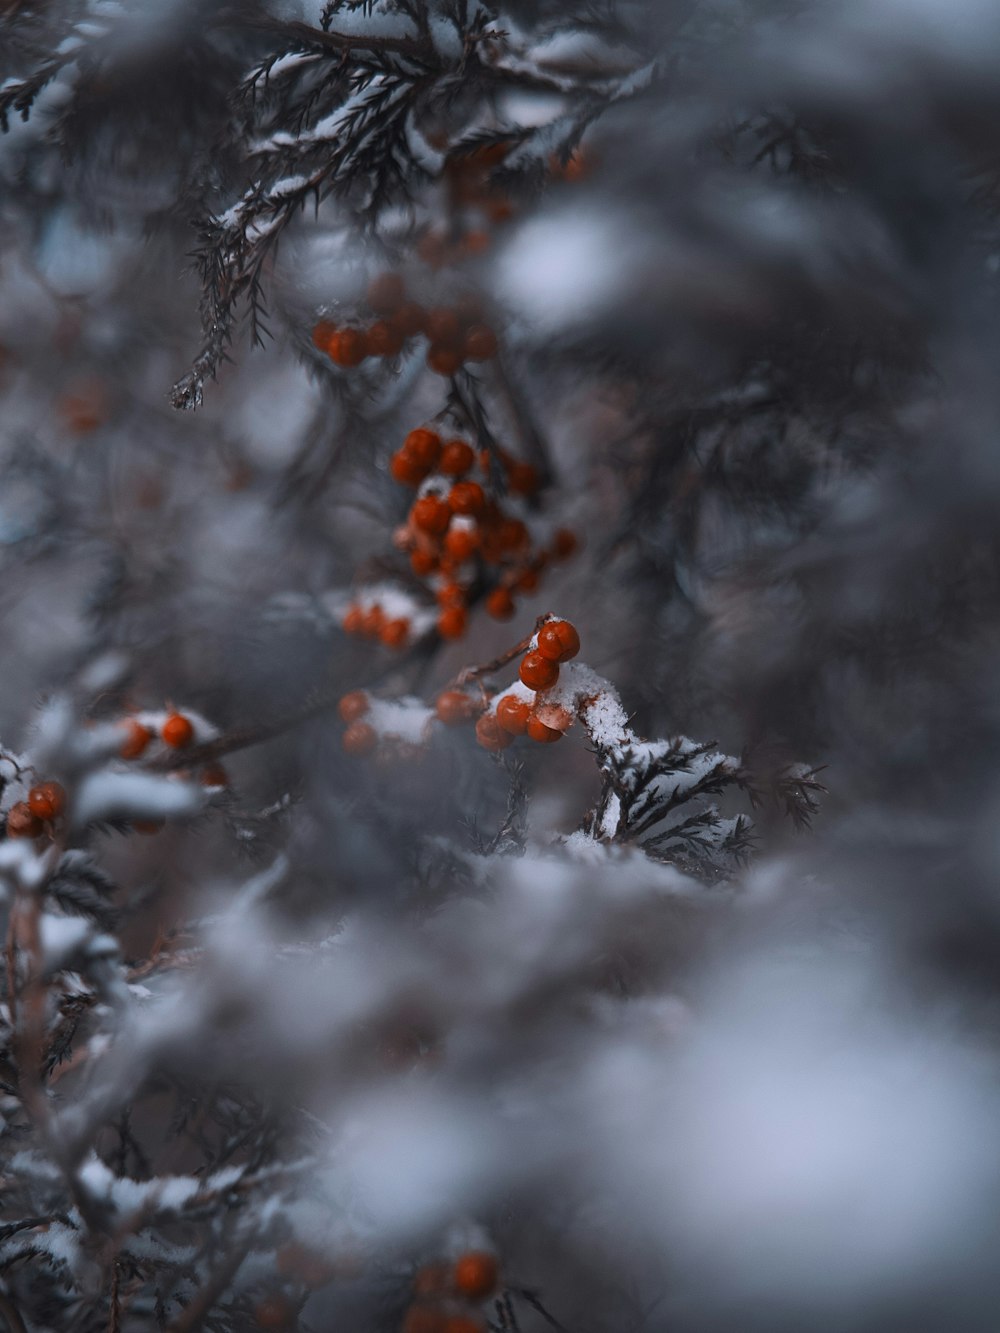 snow-covered red mistletoe